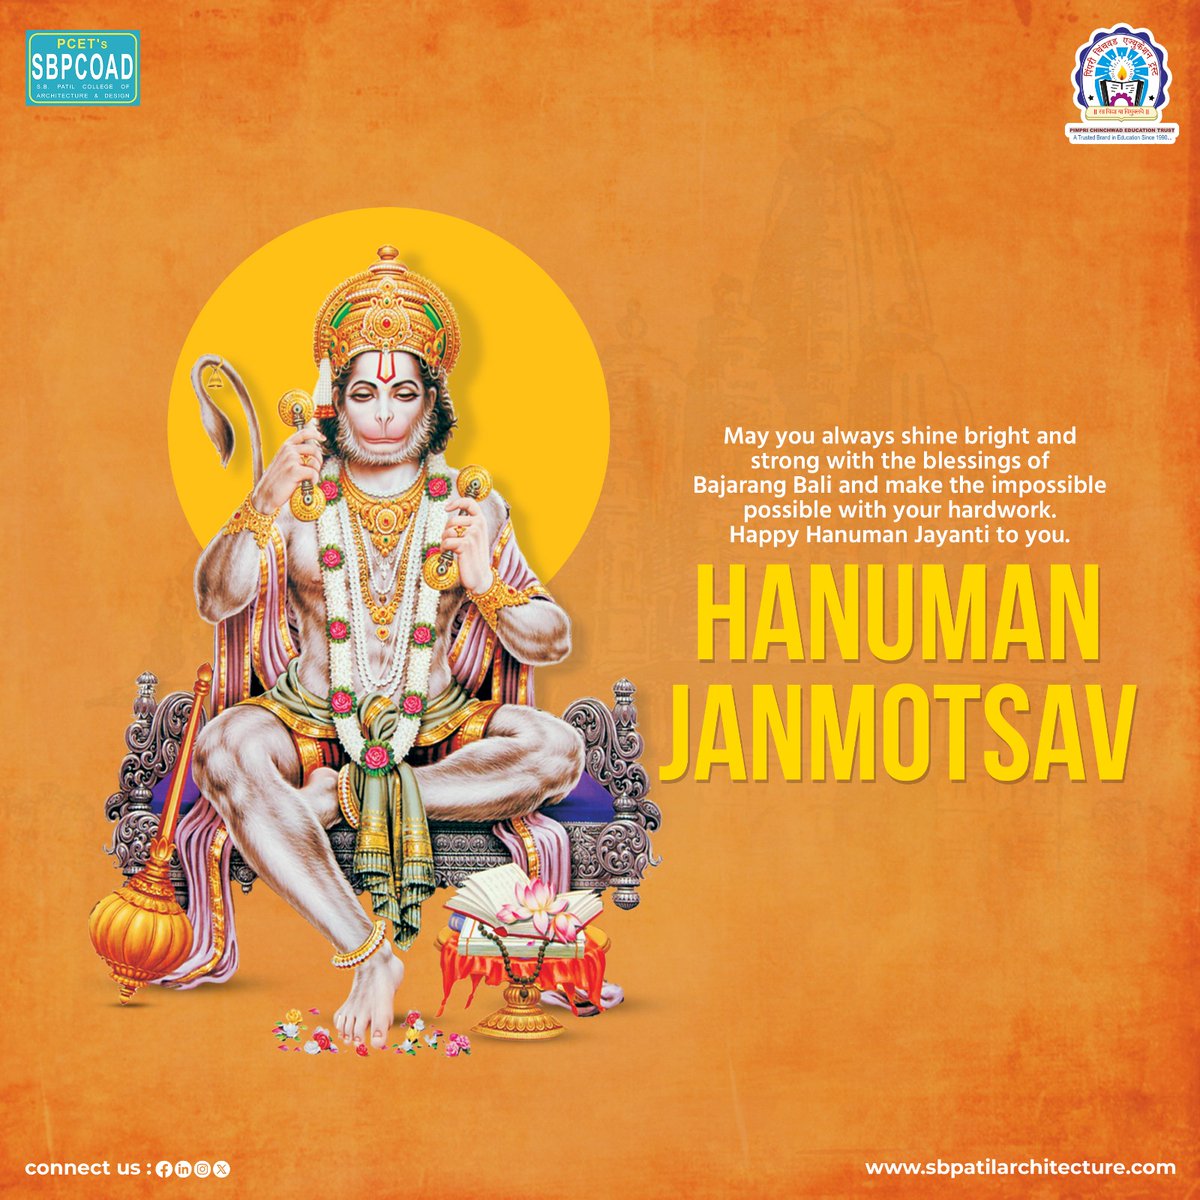 Today, we celebrate the birth of Lord Hanuman, the epitome of devotion, strength, and loyalty. May his blessings fill your life with courage and wisdom. Happy Hanuman Janmotsav! 🙏 #PCET #SBPCOAD #HanumanJanmotsav #हनुमानजन्मोत्सव #जयहनुमान #जयहनुमानजन्मोत्सव #HanumanJayanti